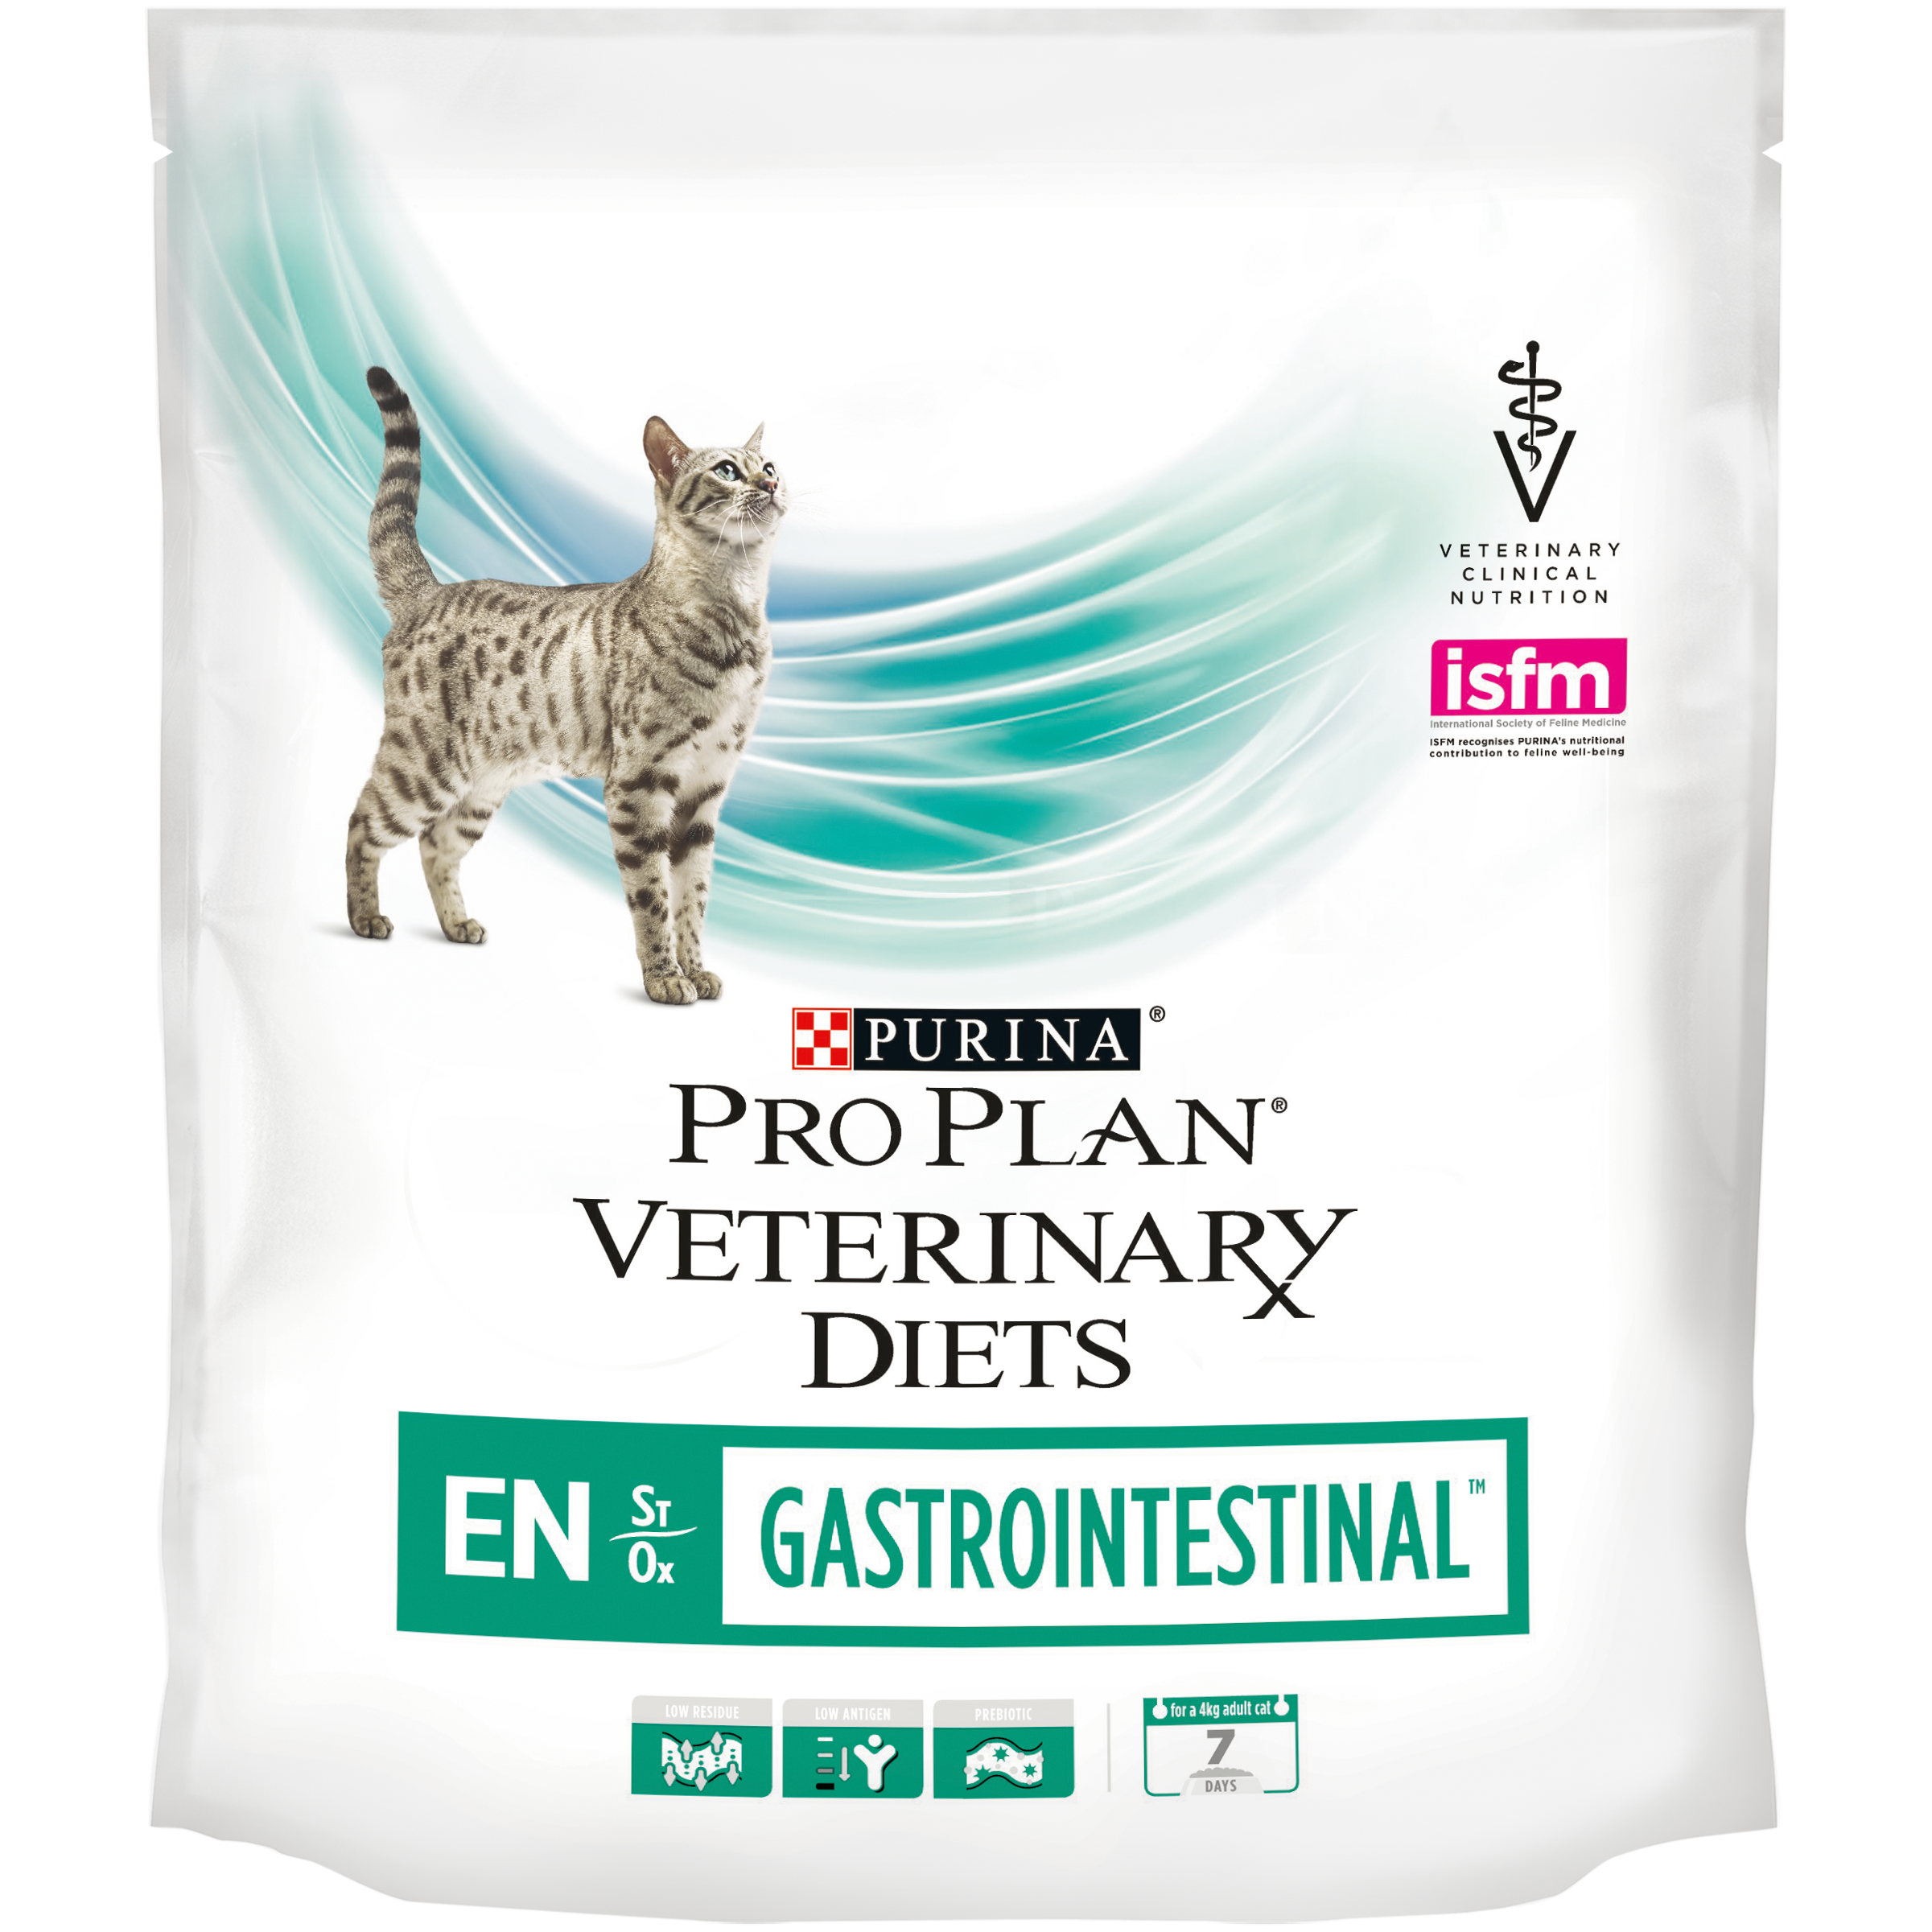 Purina pro plan ur. Pro Plan Veterinary Diets Hypoallergenic для кошек. Purina Pro Plan Veterinary Diets Gastrointestinal для кошек. Проплан Уринари для кошек сухой. Pro Plan Urinary для кошек.